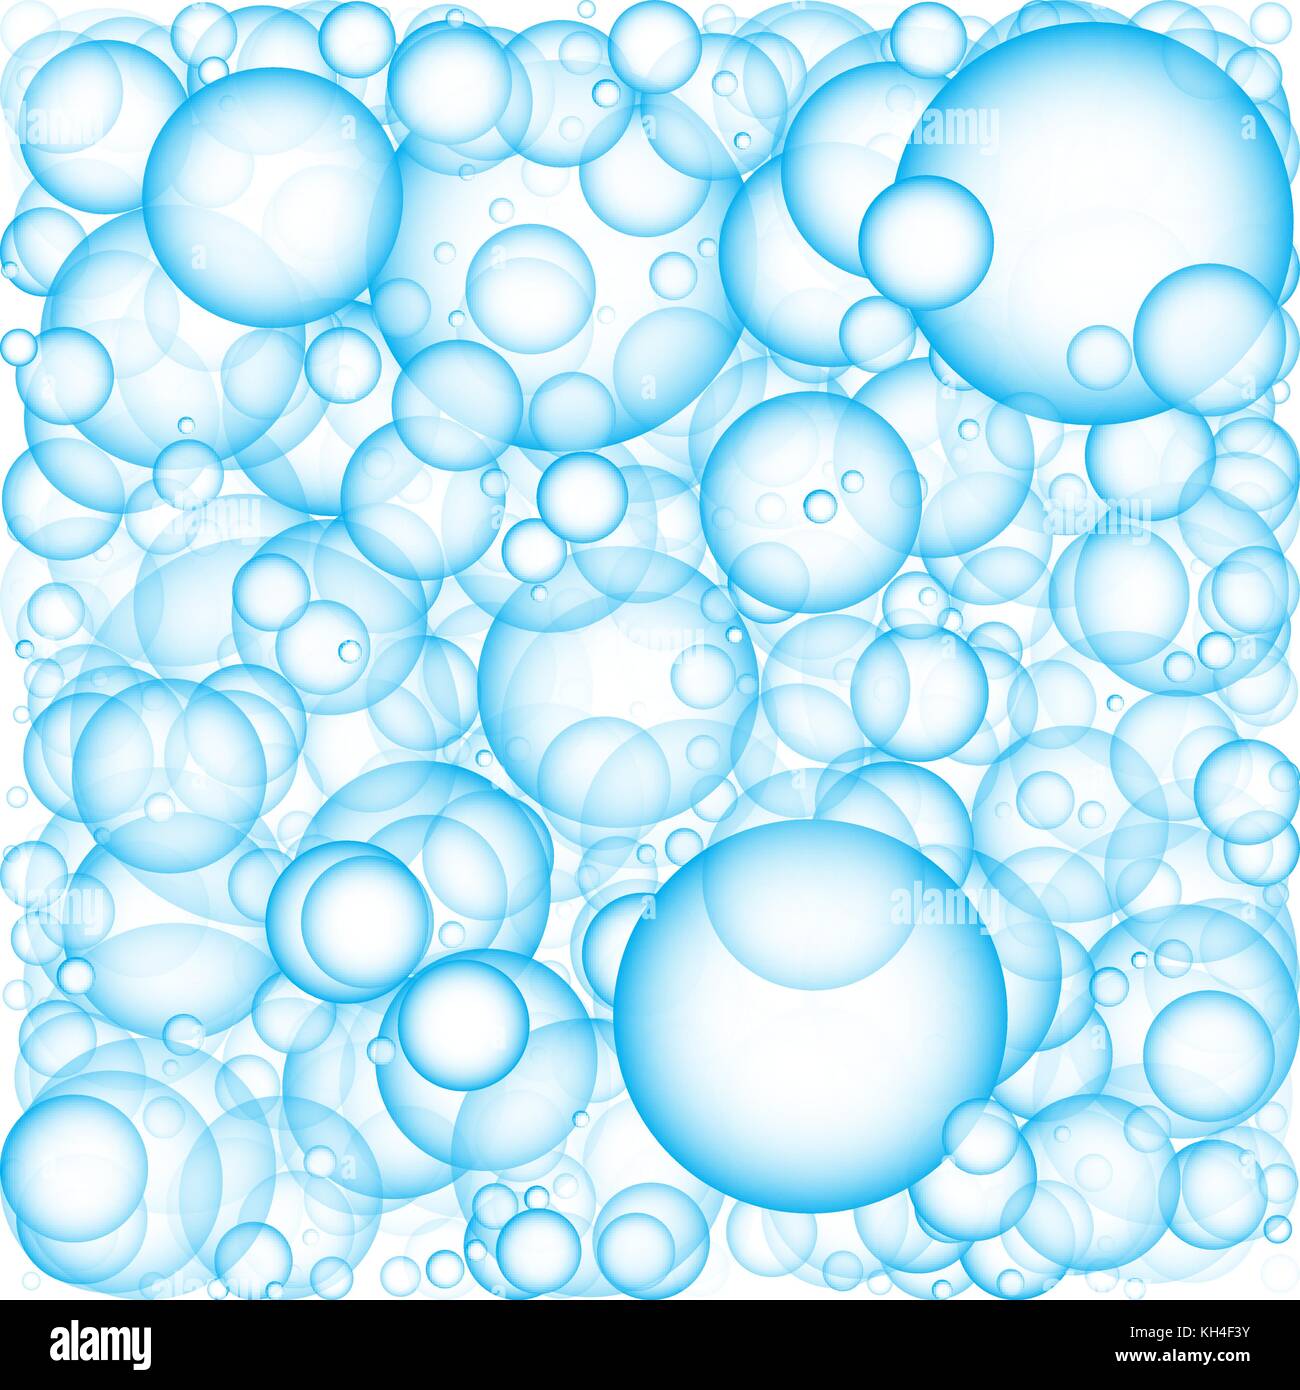 Vector Soap Bubble Realistic Soap Bubble Stock Vector (Royalty Free)  1895511178